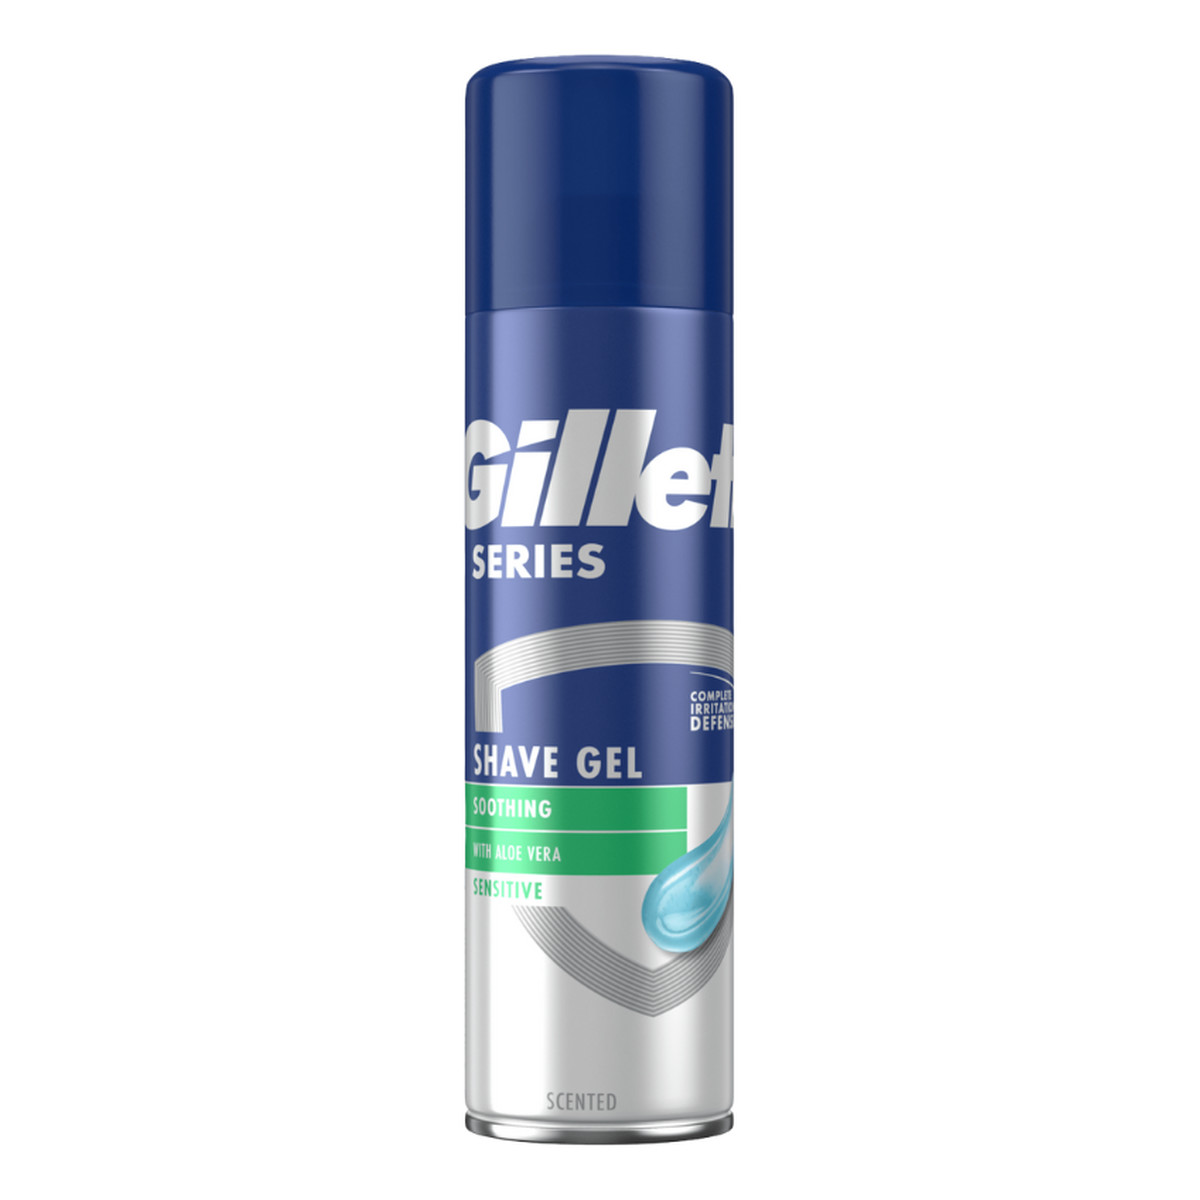 Gillette Sensitive Series Żel Do Golenia 200ml